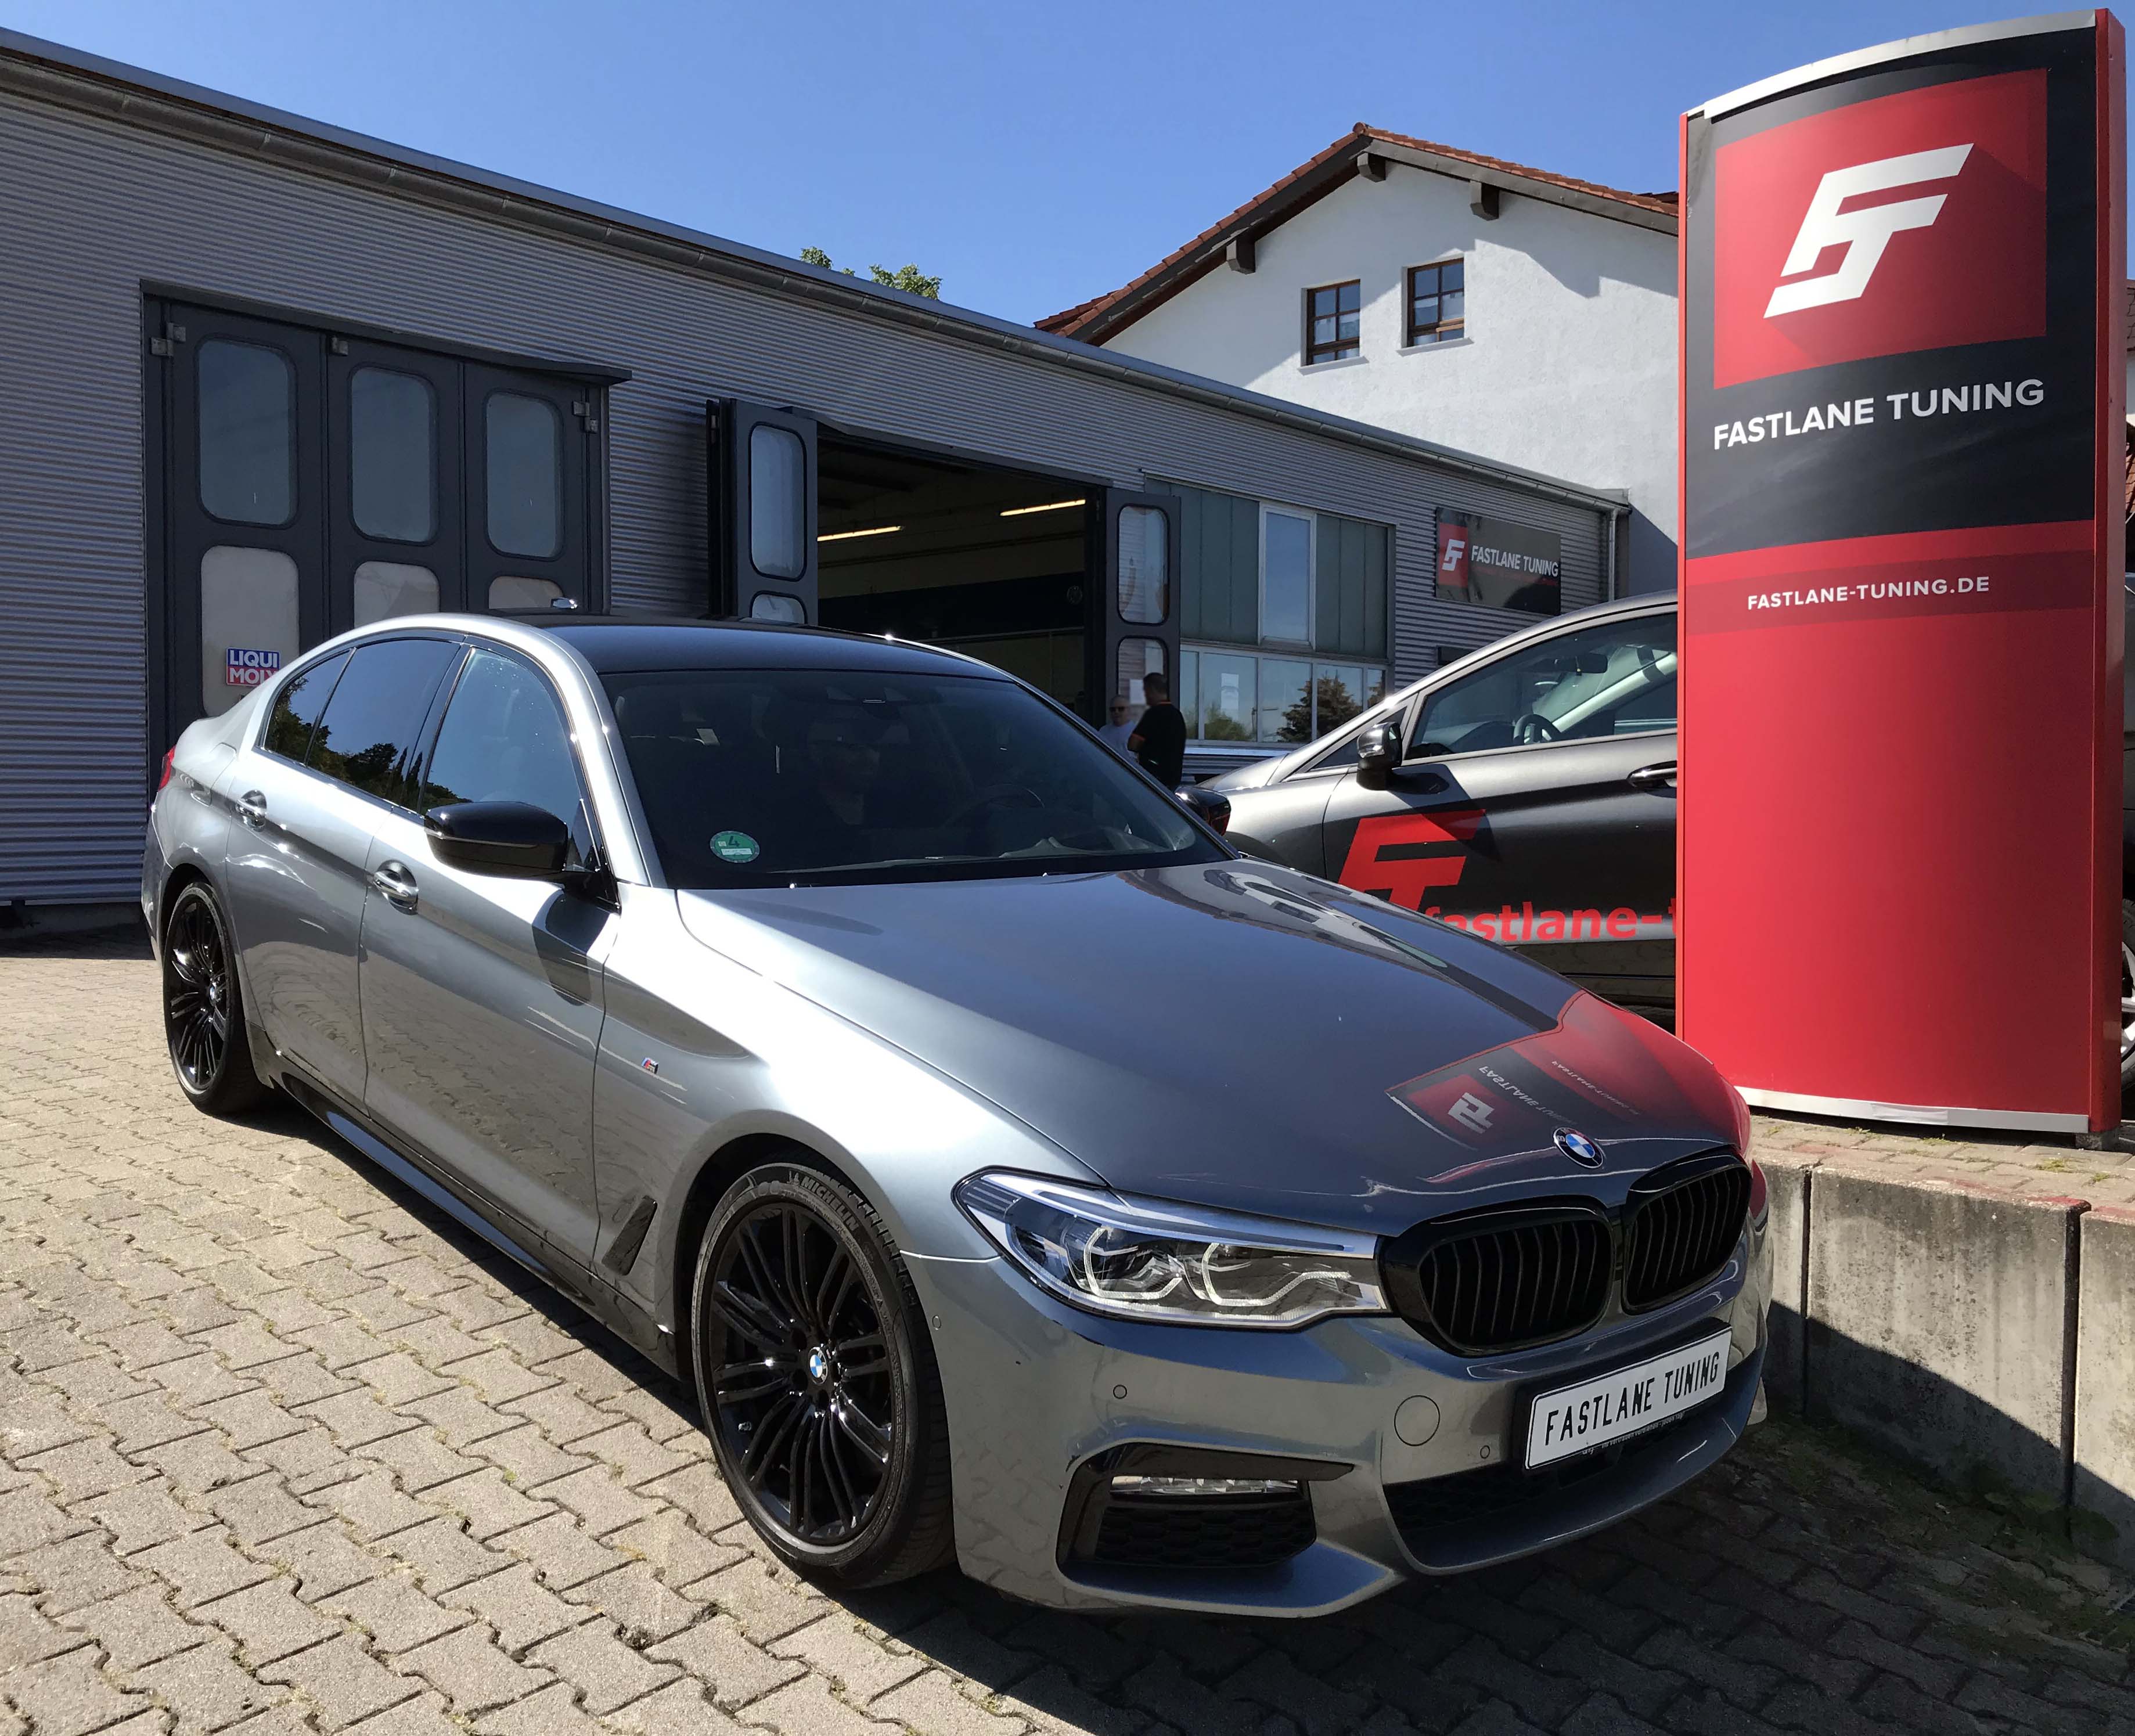 https://fastlane-tuning.de/files/uploads/Bilder/Fastlane_Tuning_BMW_540i.jpg